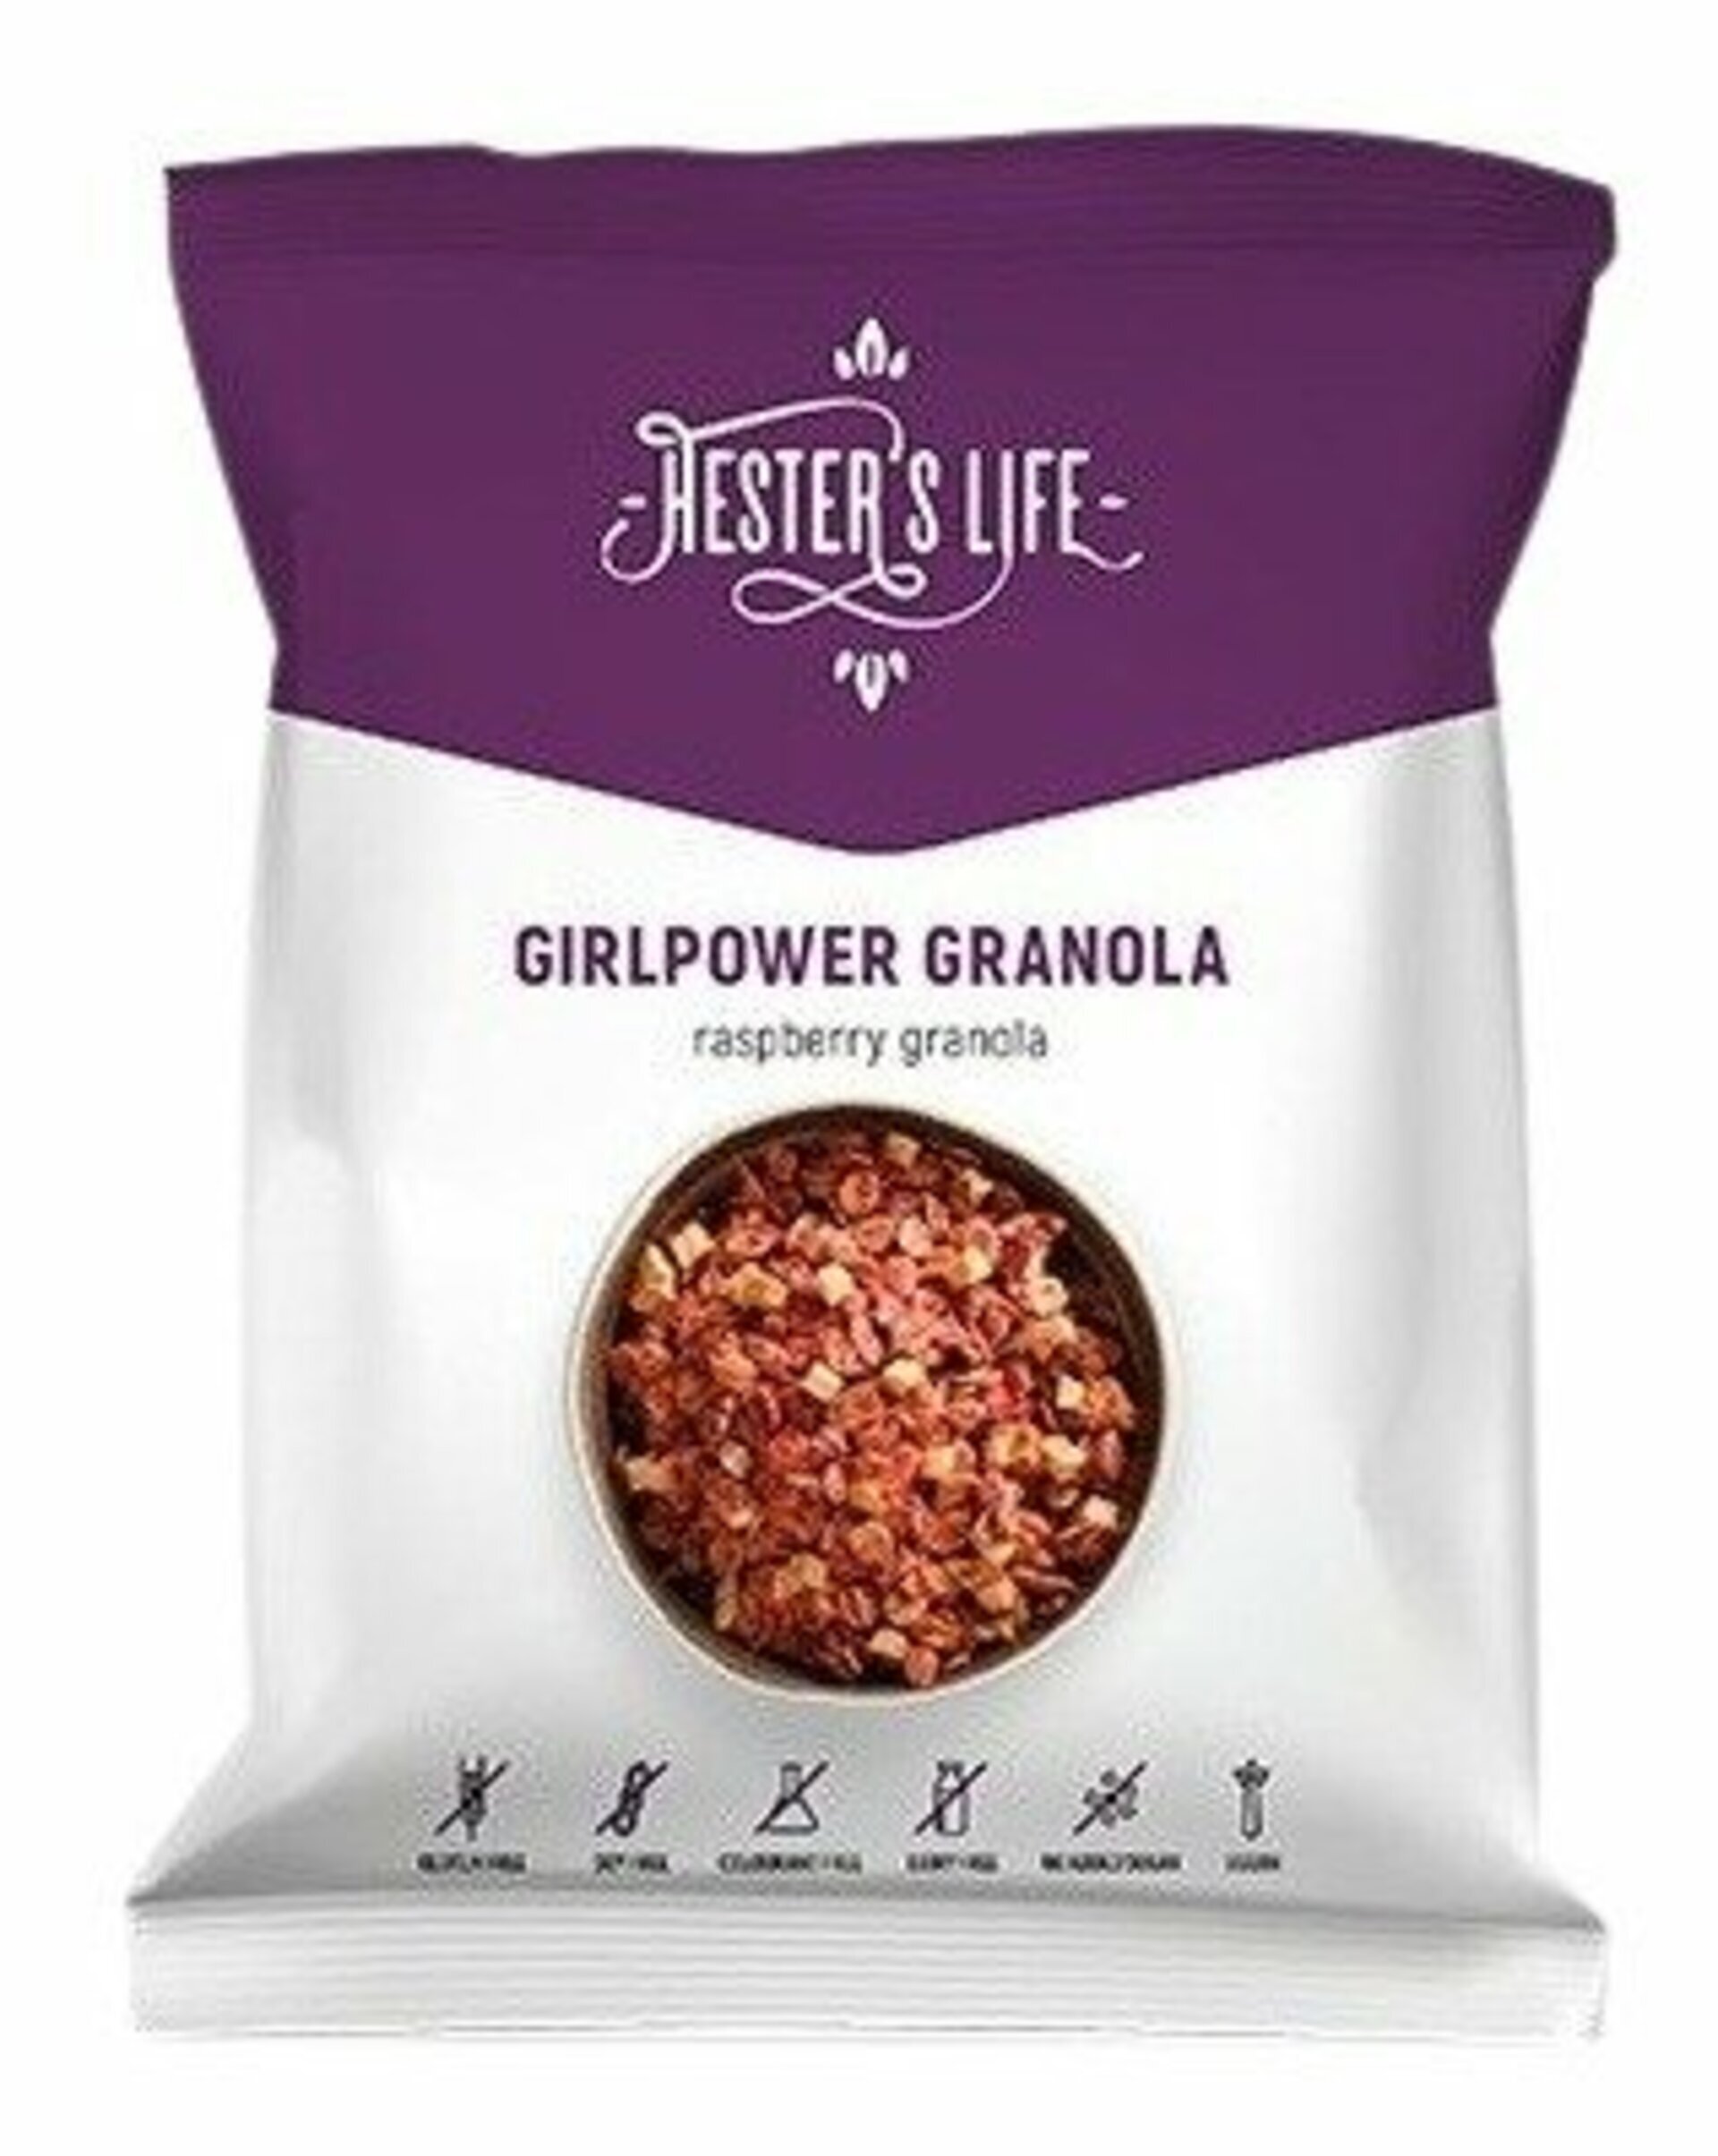 Hesters life Extra Girlpower granola 60 g expirace